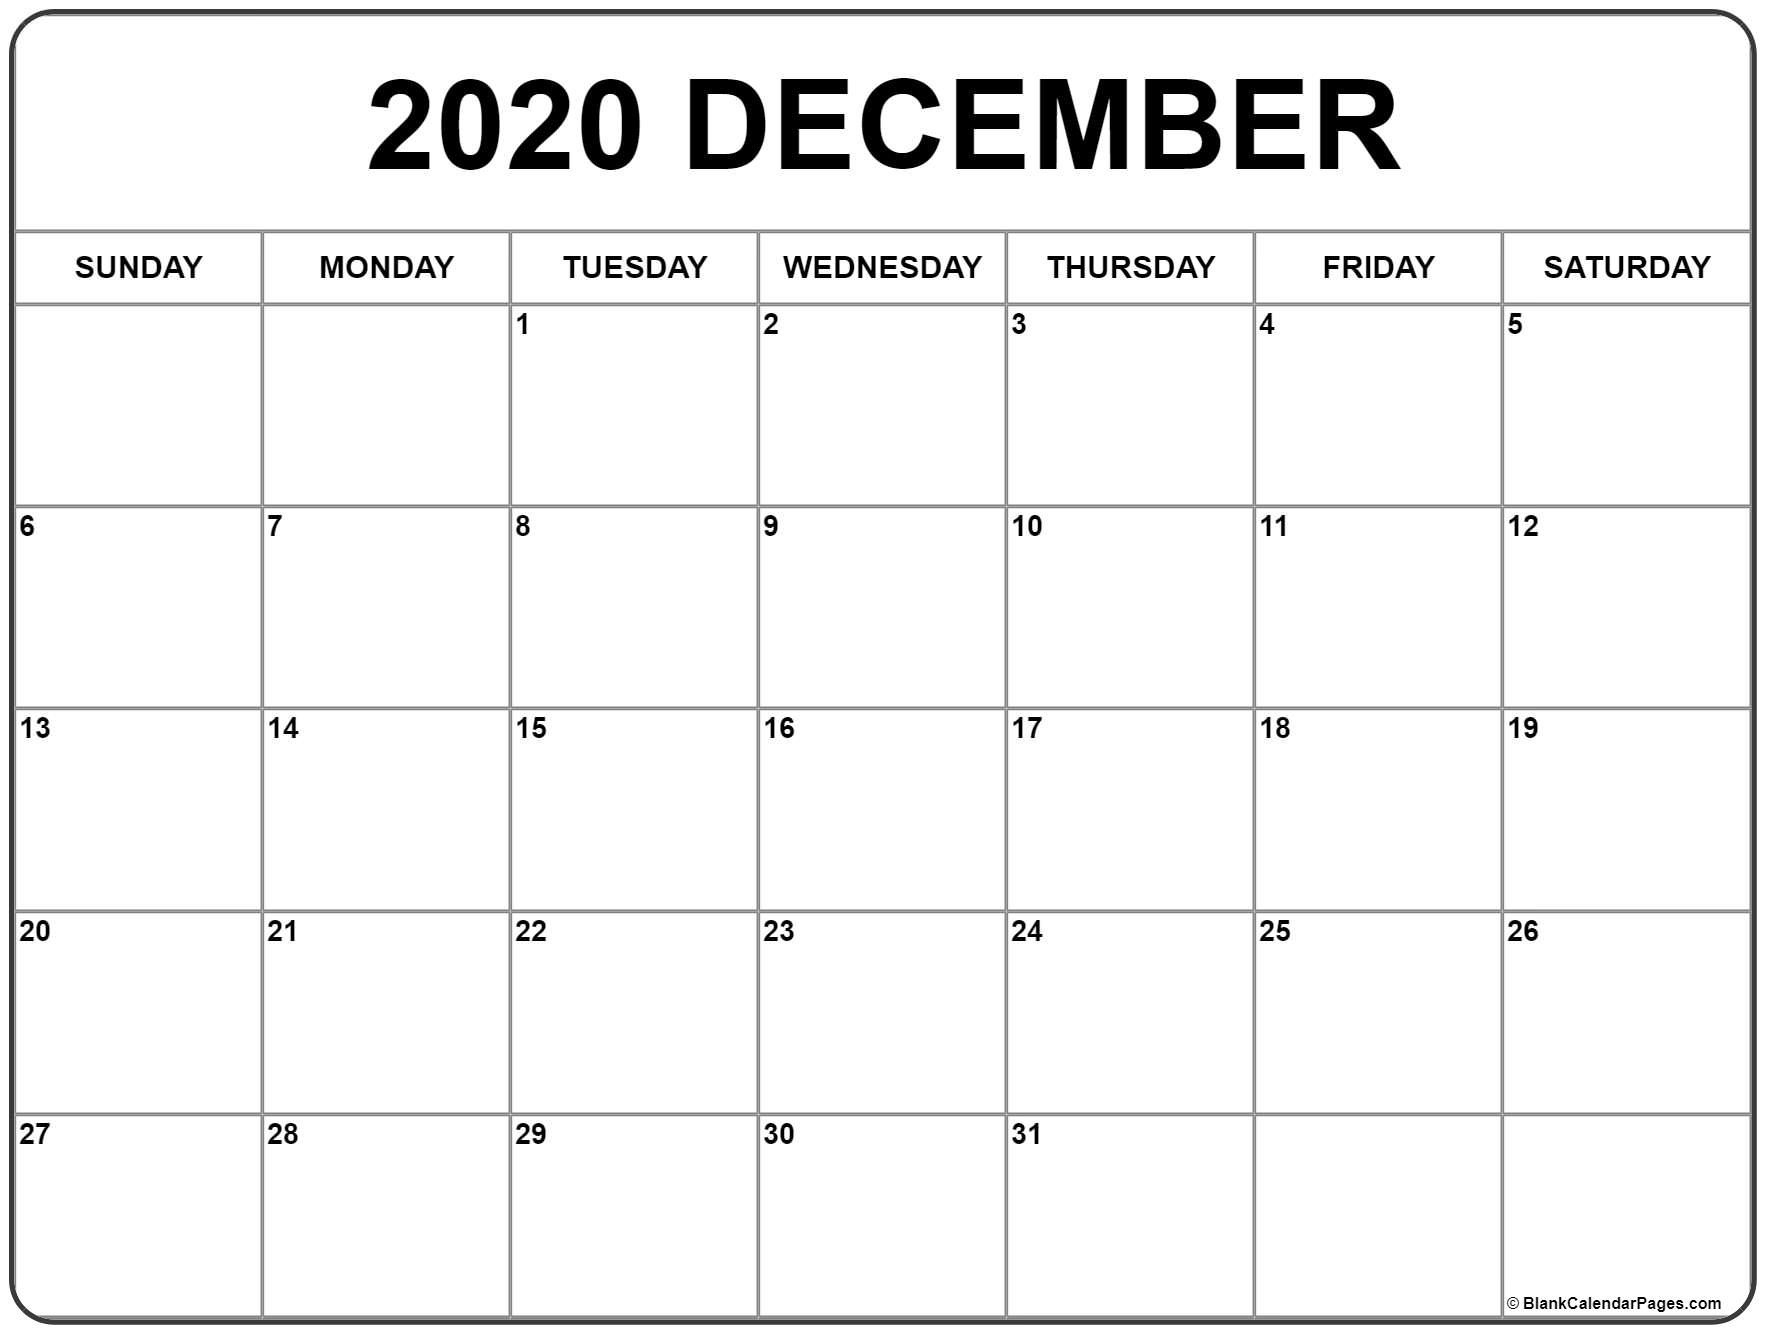 December 2020 Printable Calendar Template #2020Calendars Dashing 2020 Calendar Blank Starting Monday